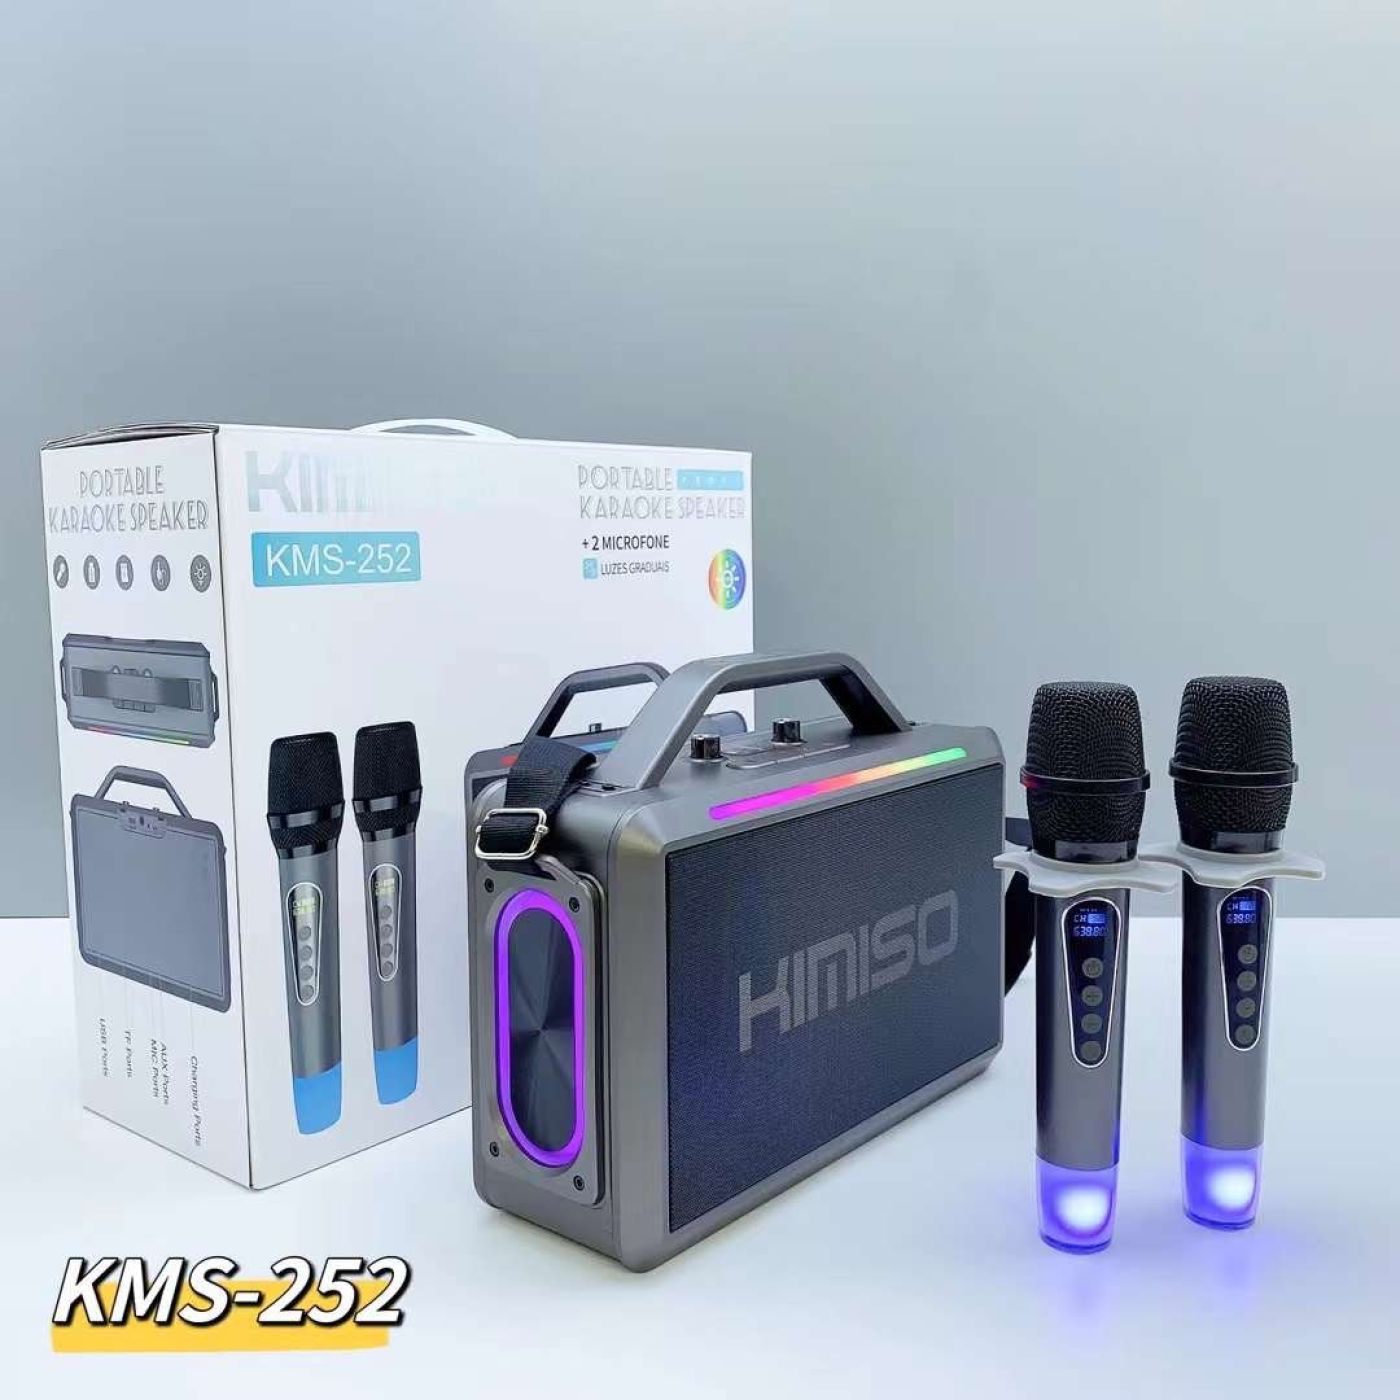 Loa Karaoke Bluetooth Kimiso KMS 252 Loa Bluetooth Mini Karaoke, Bản Cao Cấp, Kèm 2 Micro Không Dây